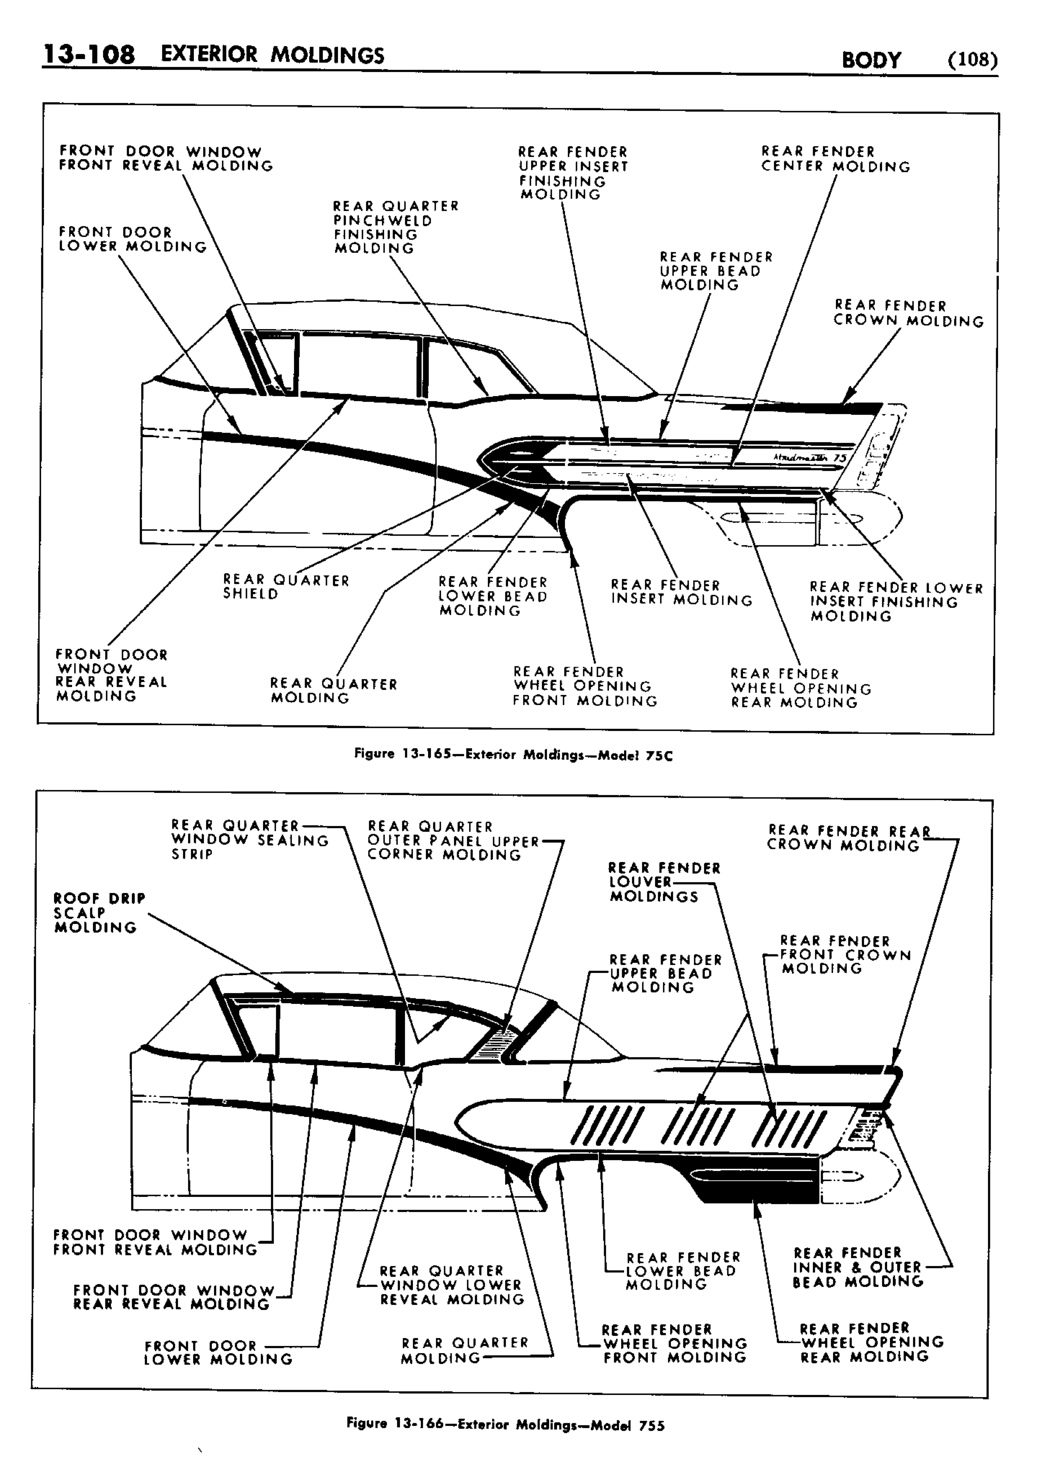 n_1958 Buick Body Service Manual-109-109.jpg